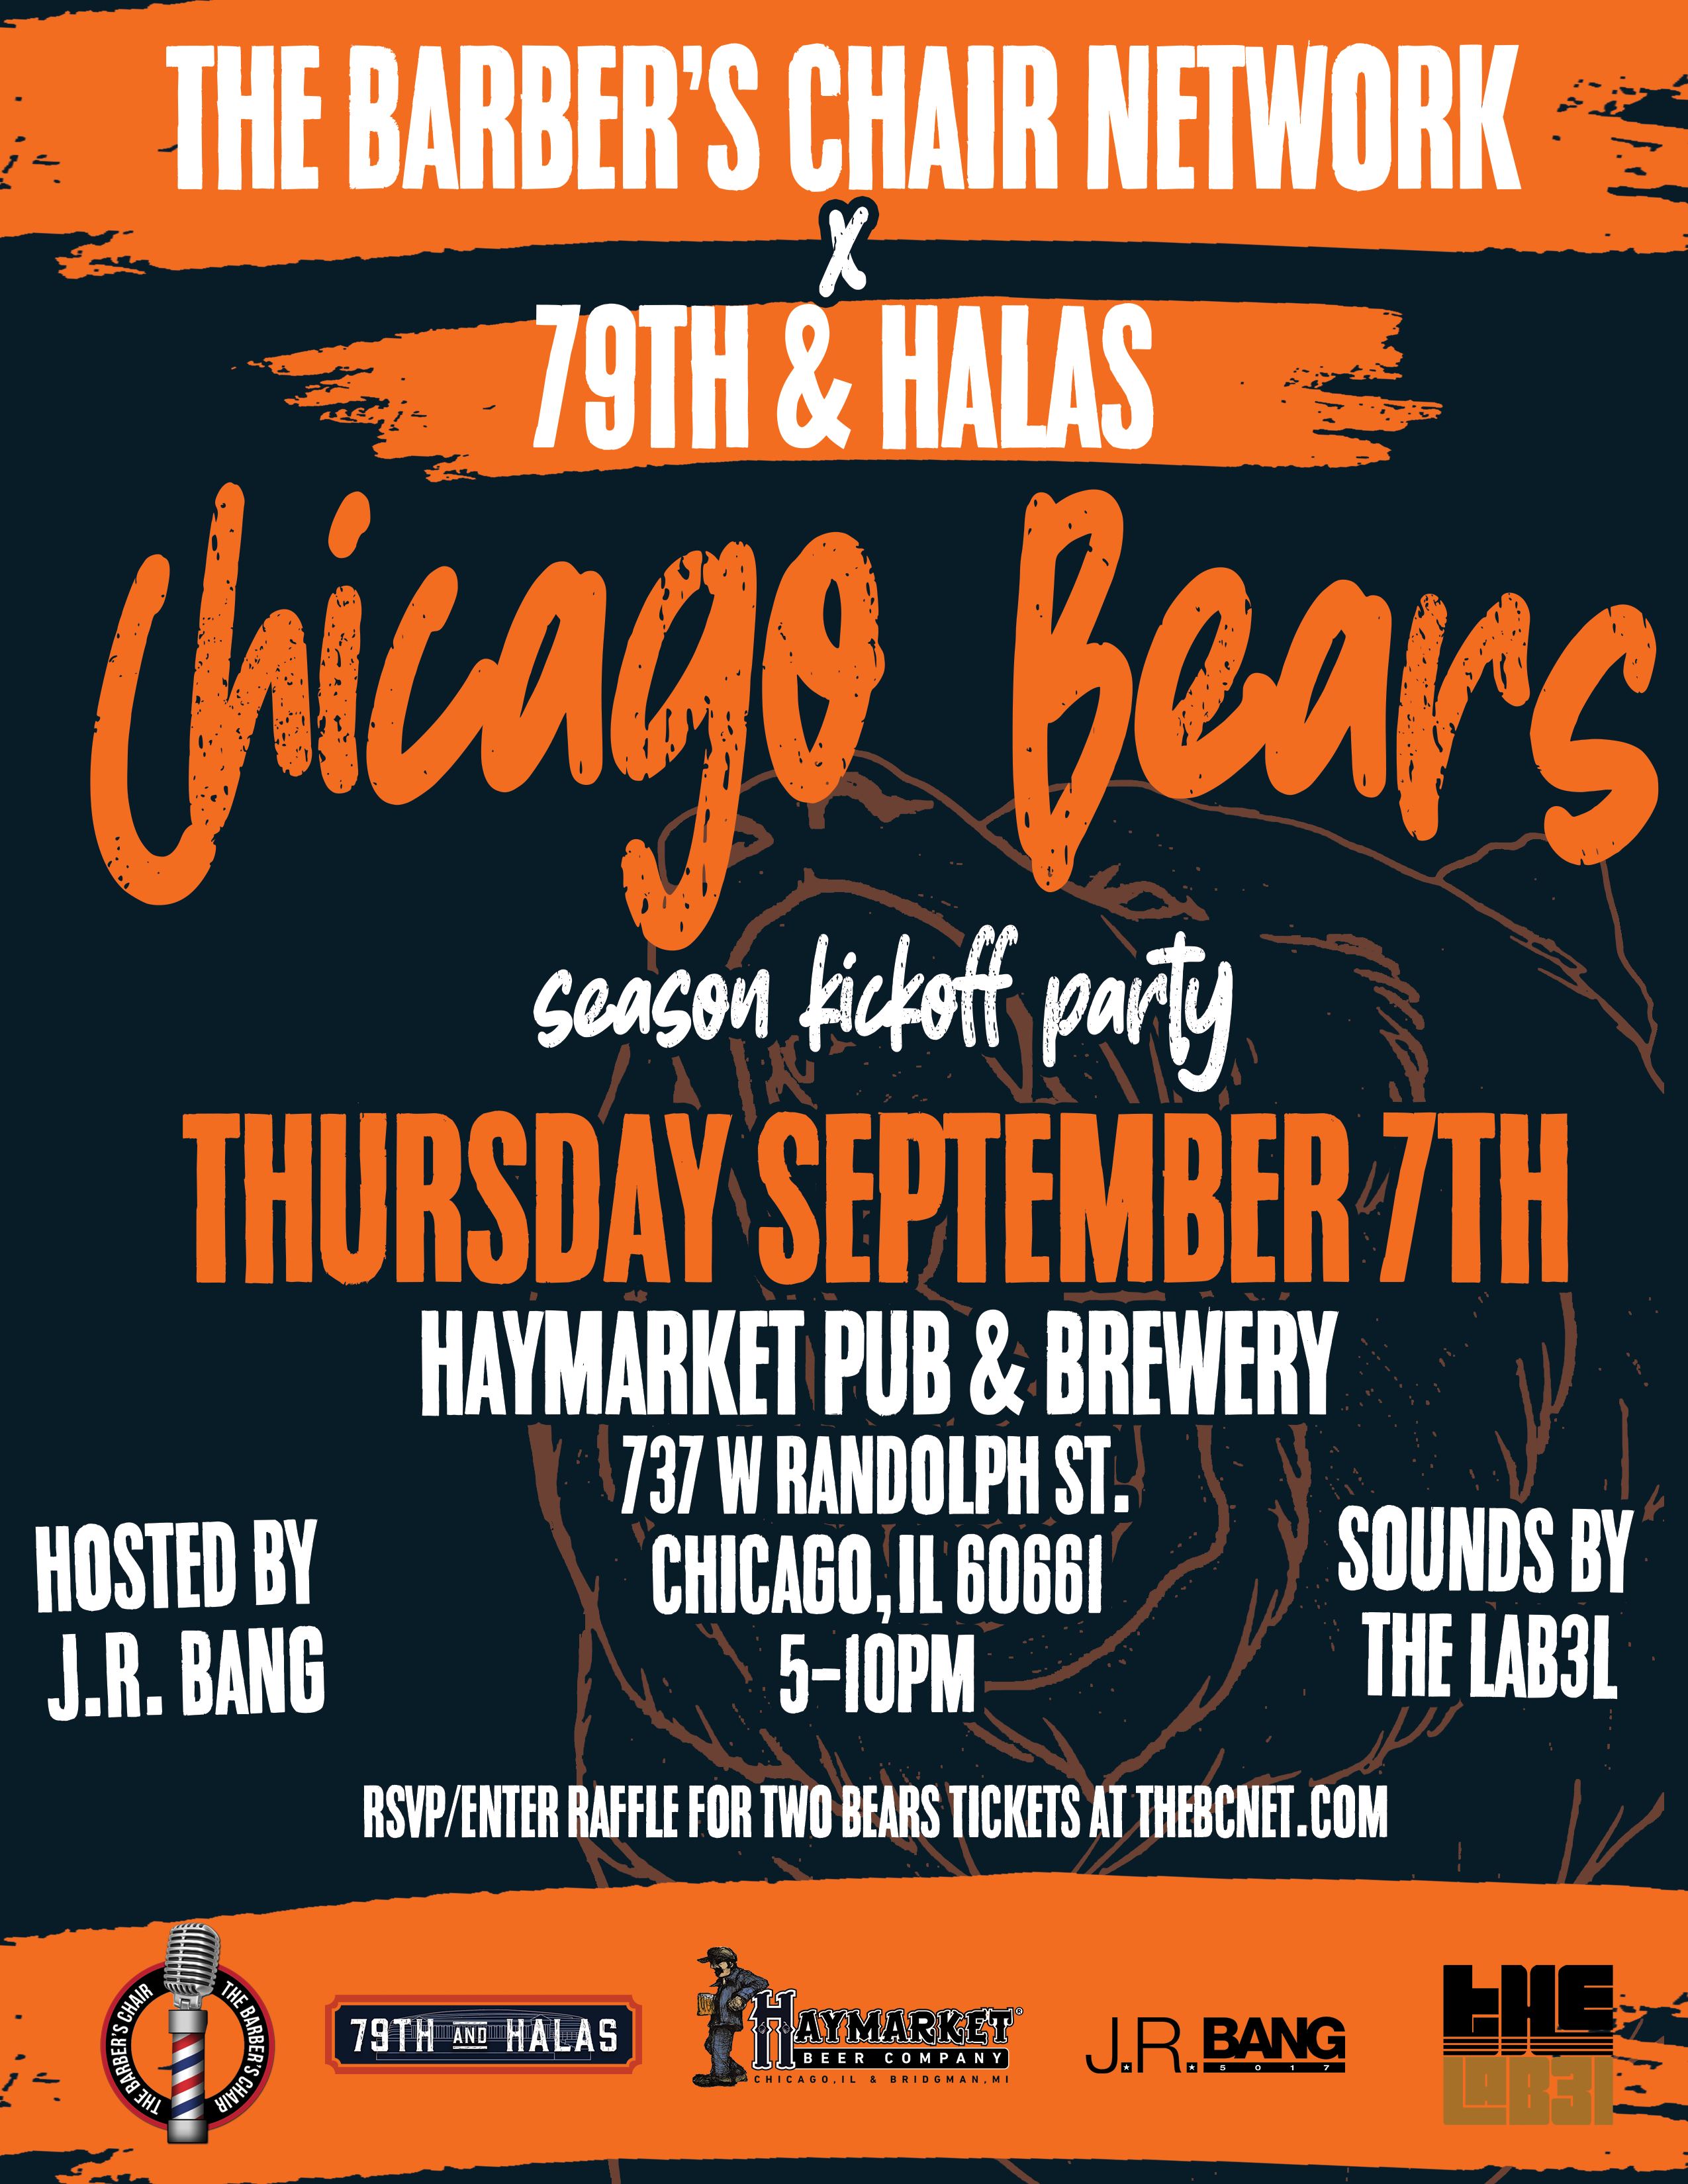 chicago bears season tickets